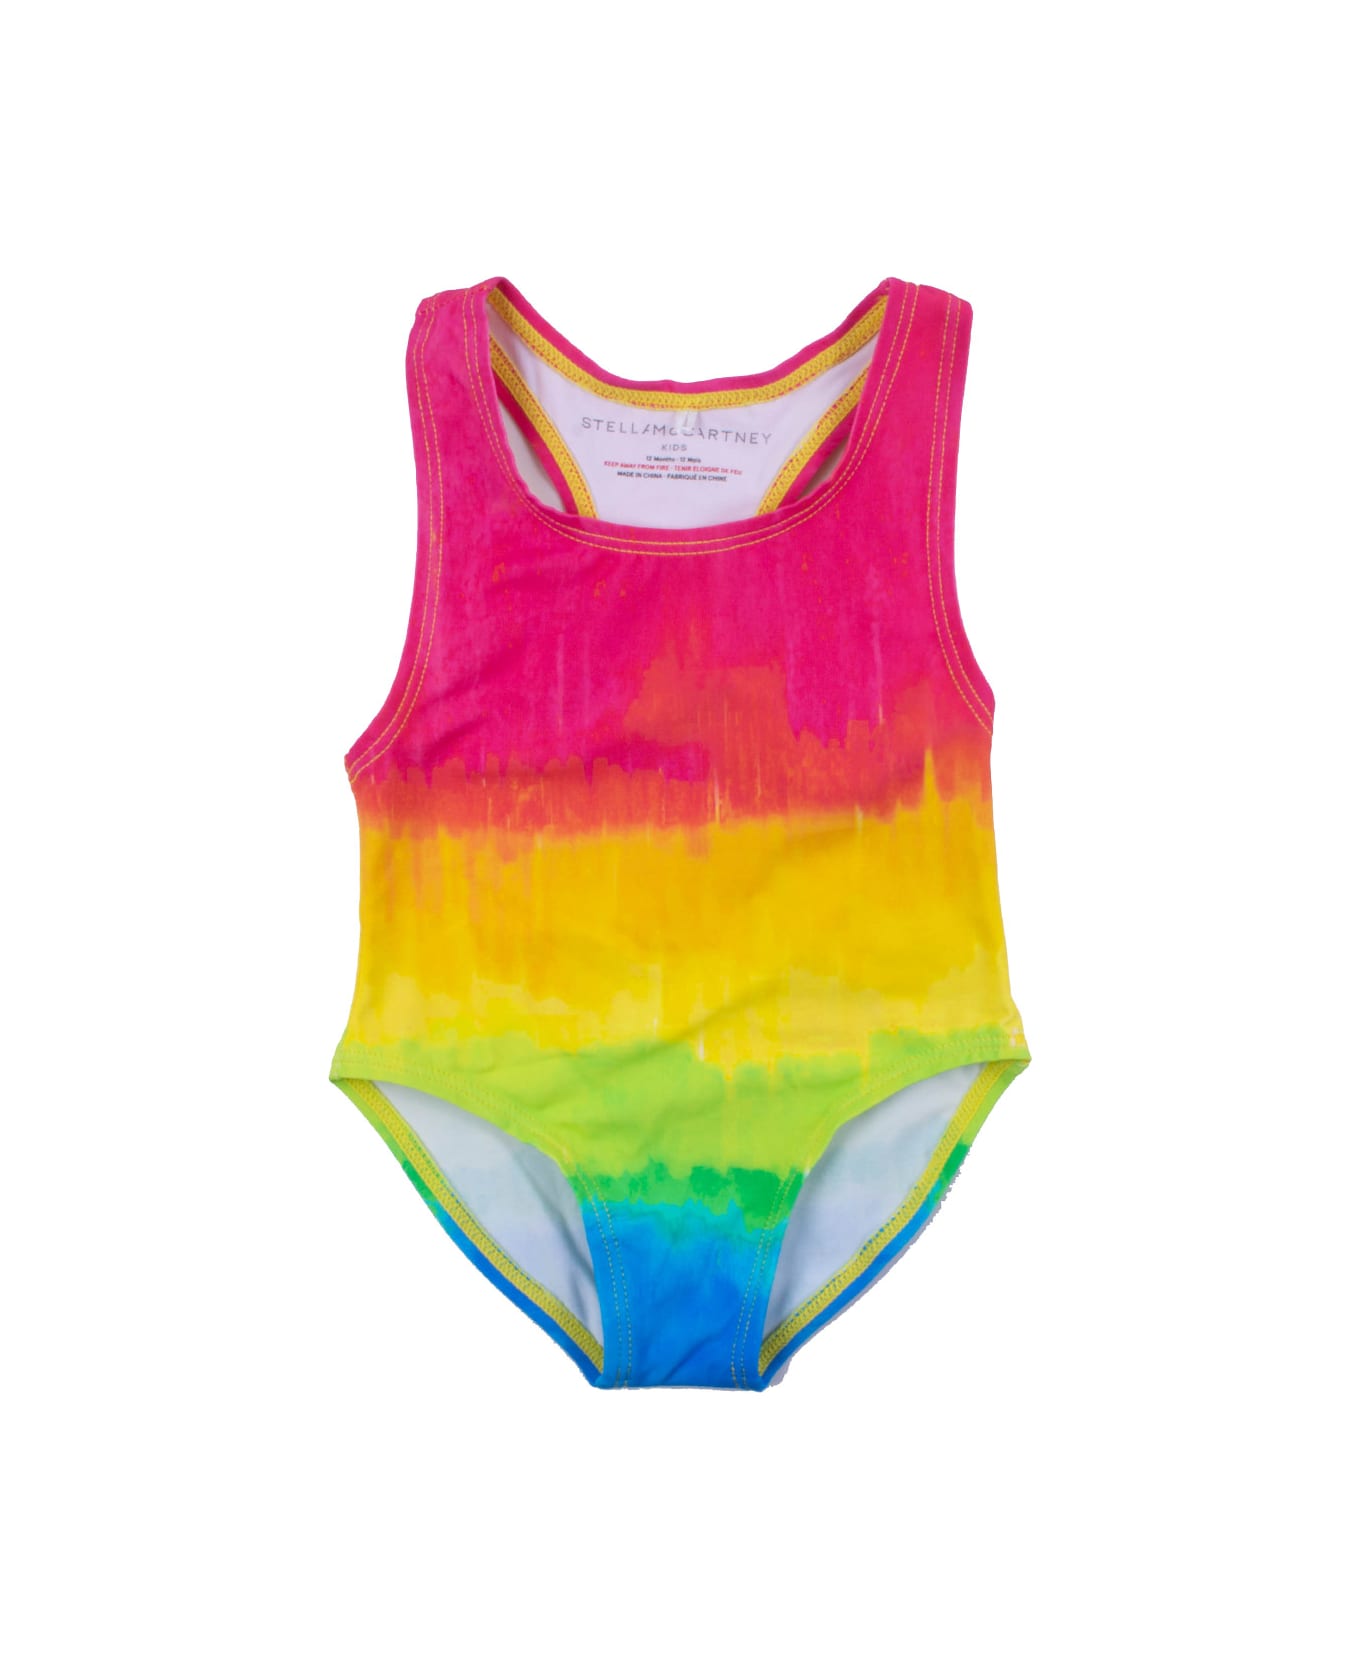 Stella McCartney Kids Nylon One Piece Swimsuit - Multicolor